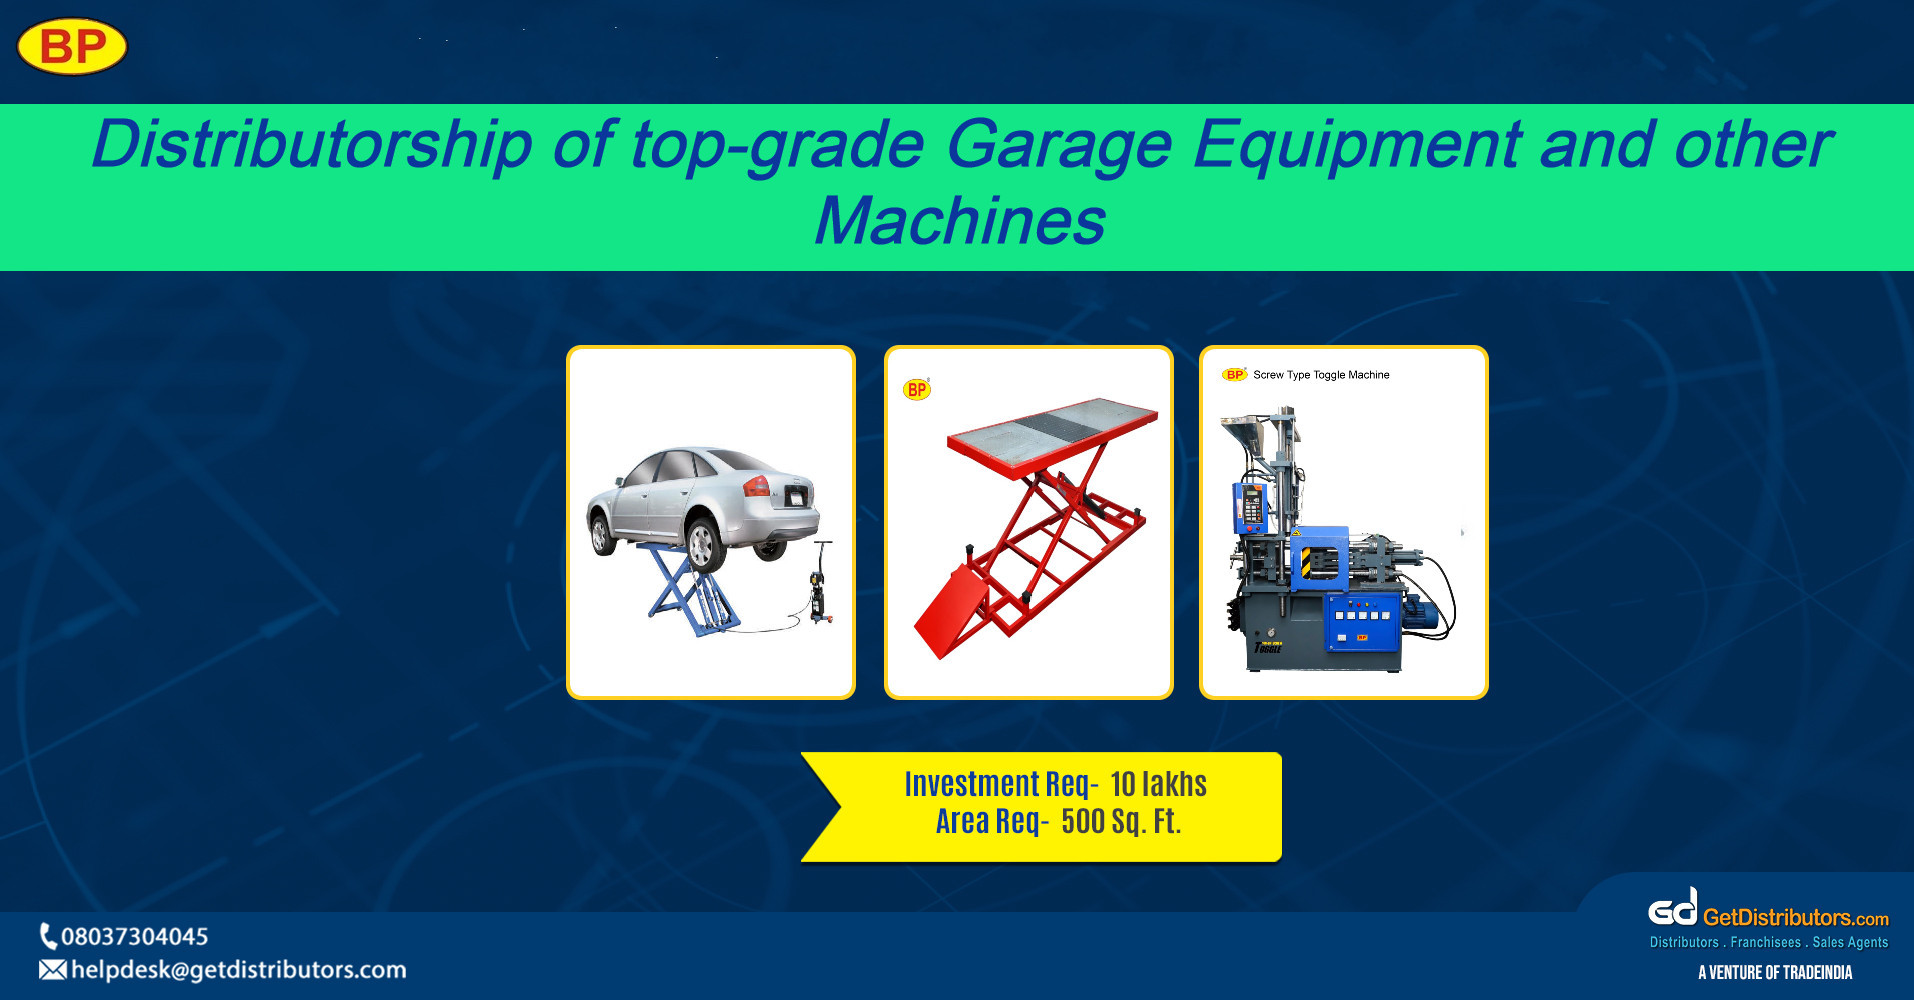 Distributorship of top-grade garage equipment and other machines